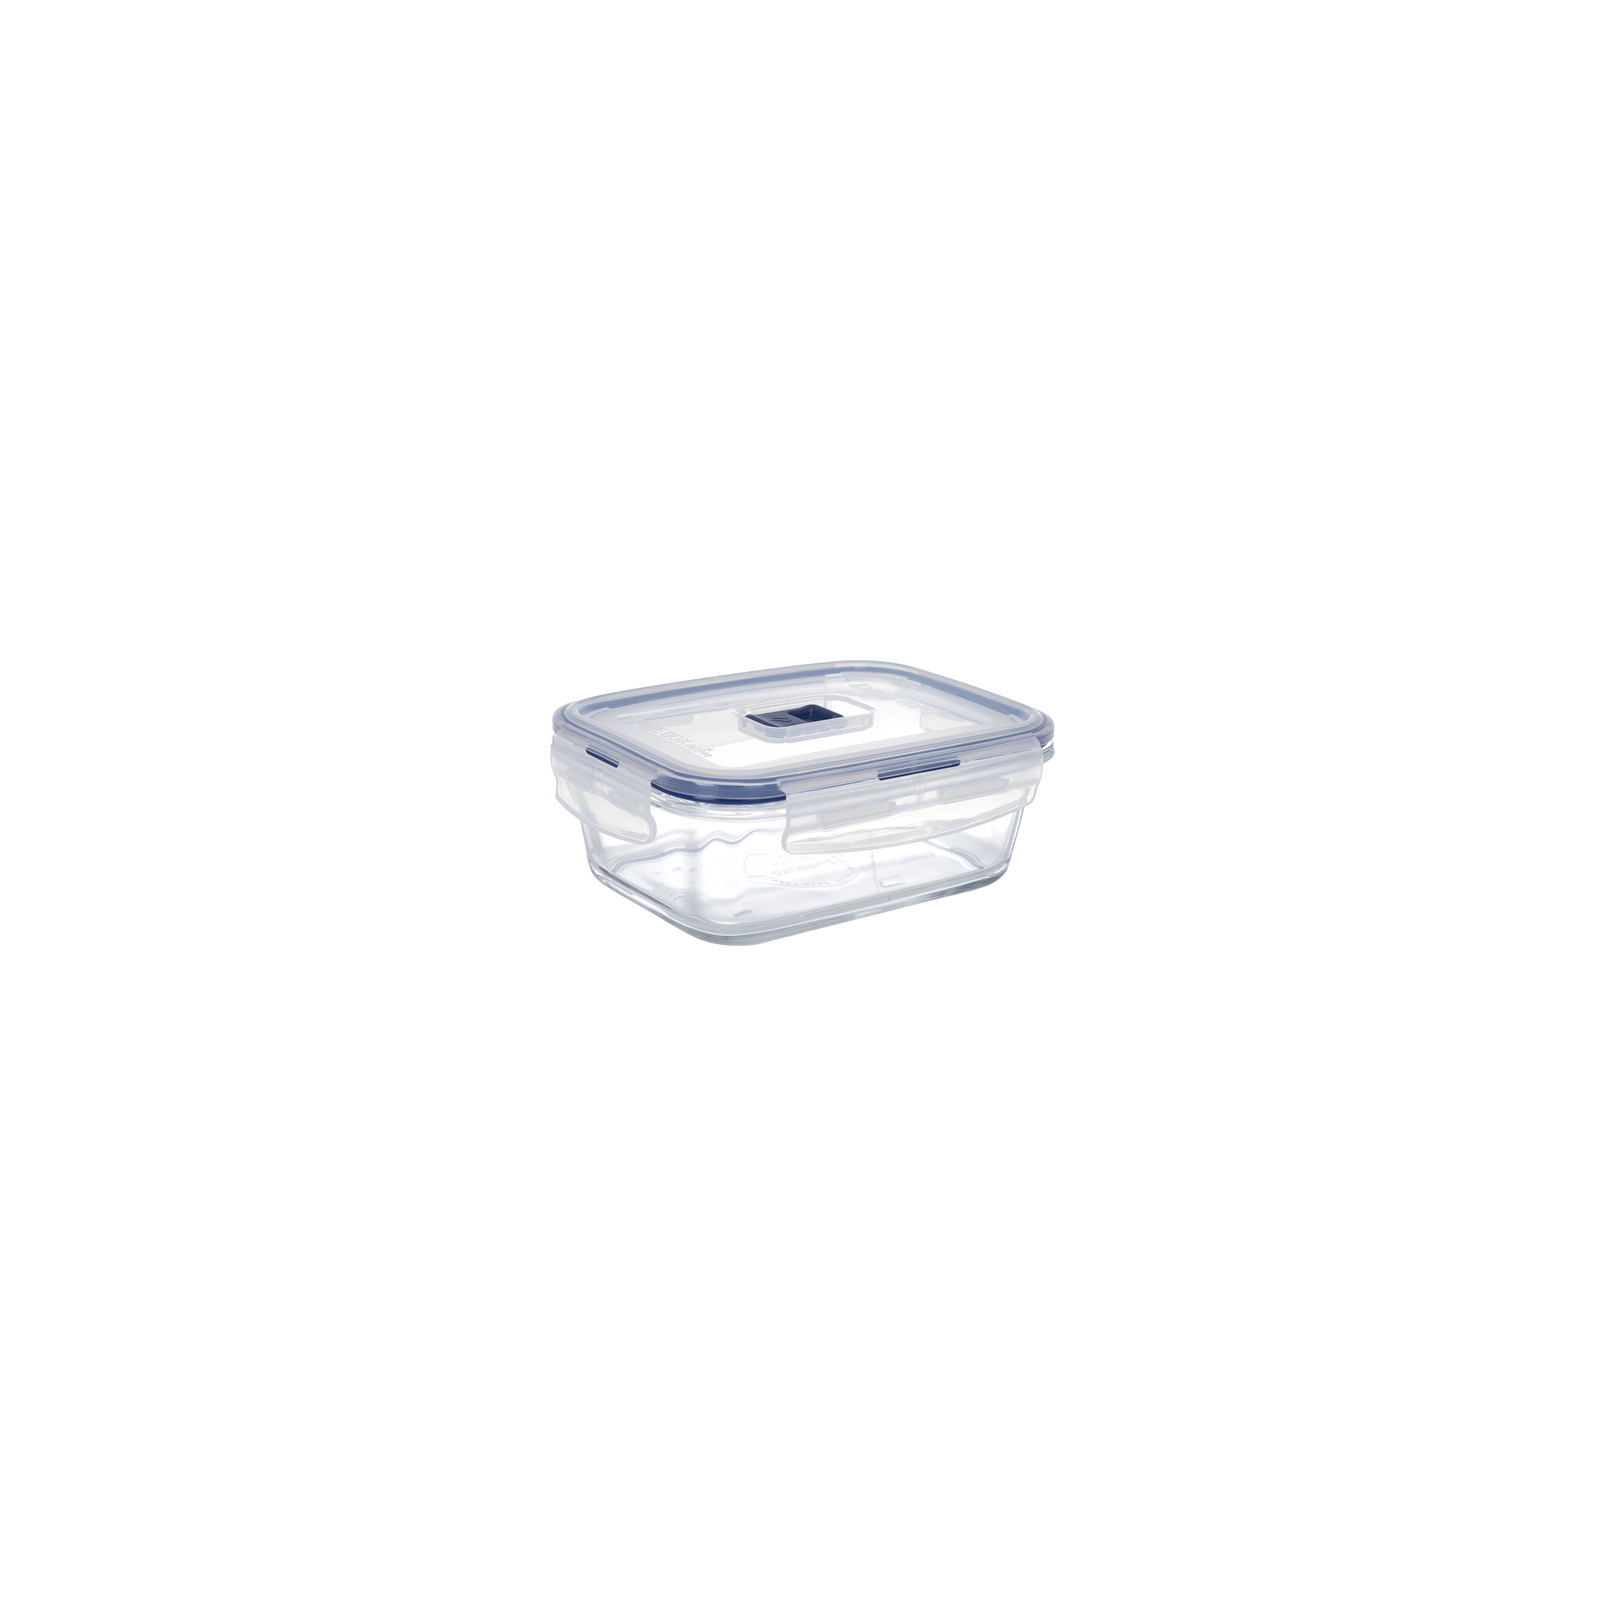 Харчовий контейнер Luminarc Pure Box Active набор 3шт прямоуг. 380мл/820мл/1220мл + сумк (P4129) зображення 4